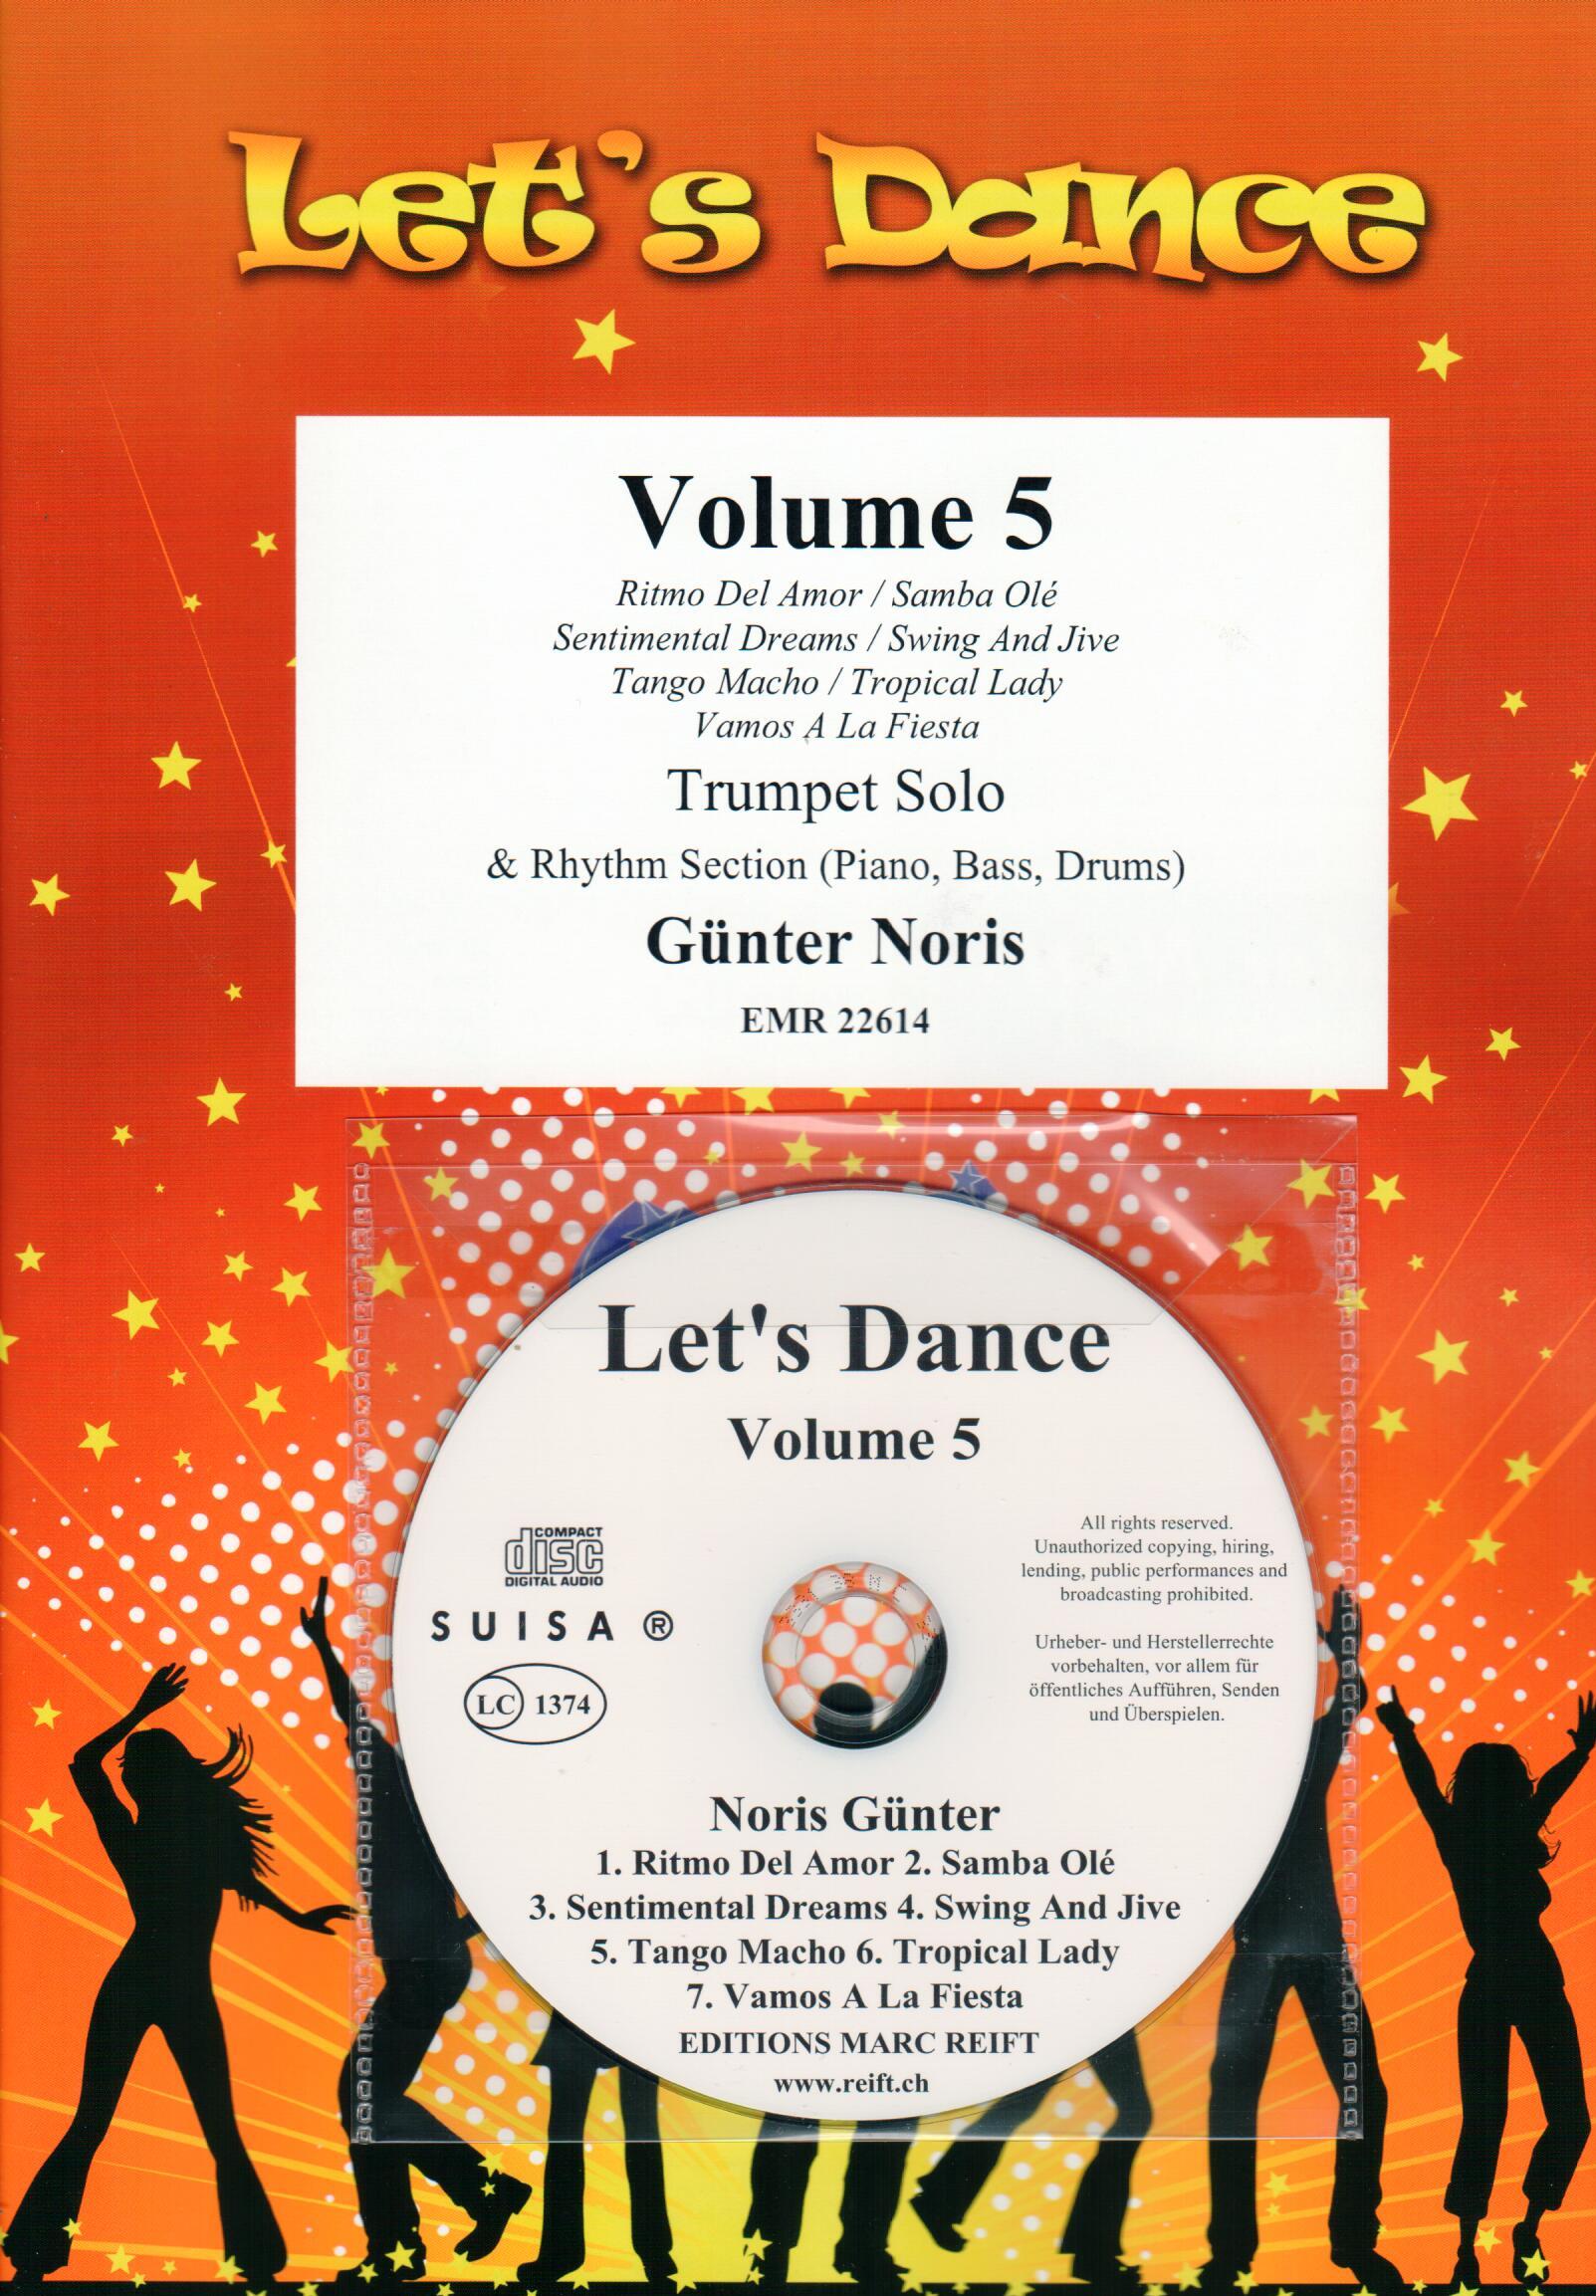 LET'S DANCE VOLUME 5